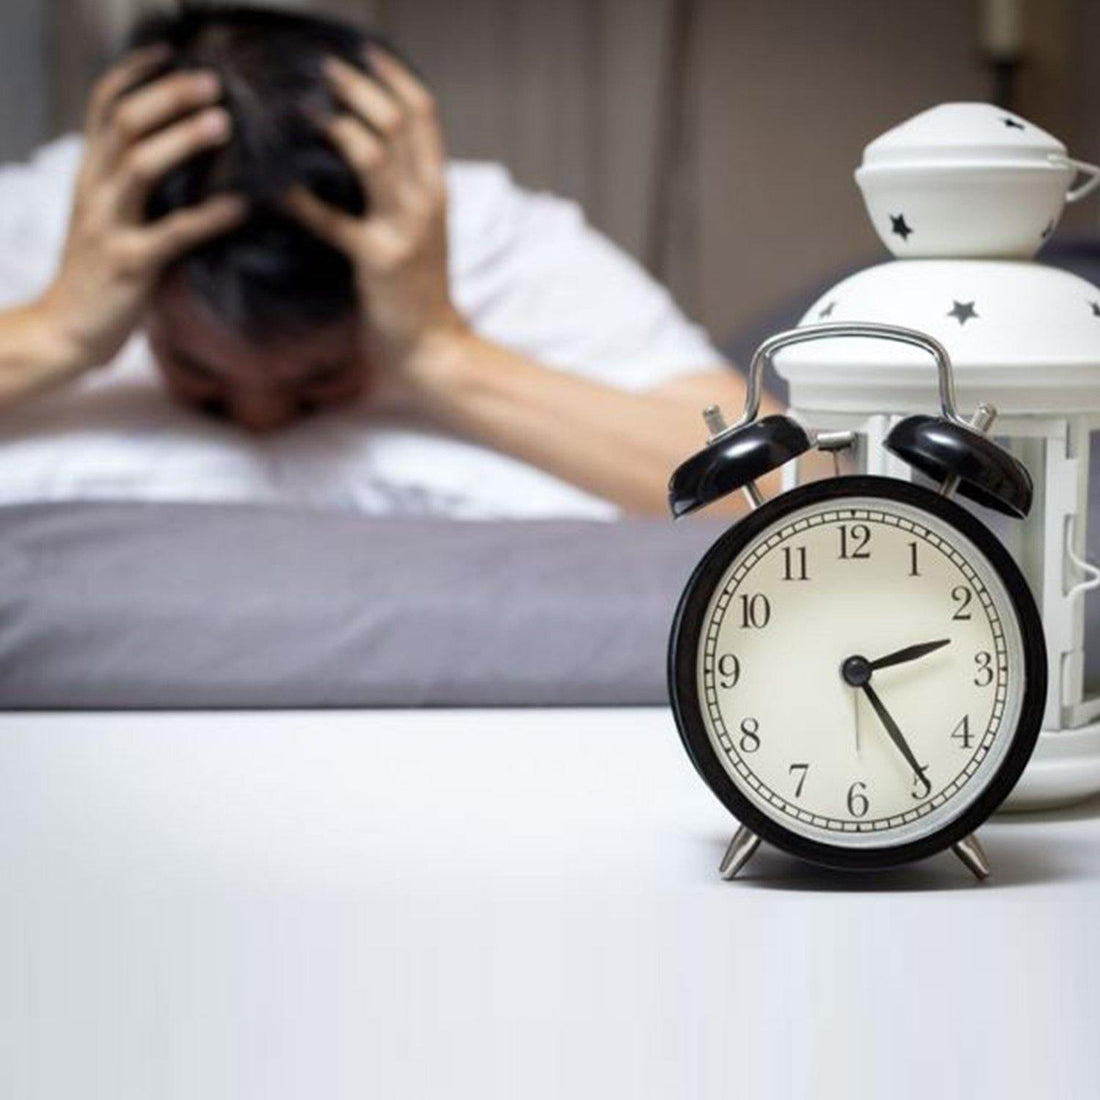 5 Incredible Tips To Avoid Shift Work Sleep Disorder - SleepCosee